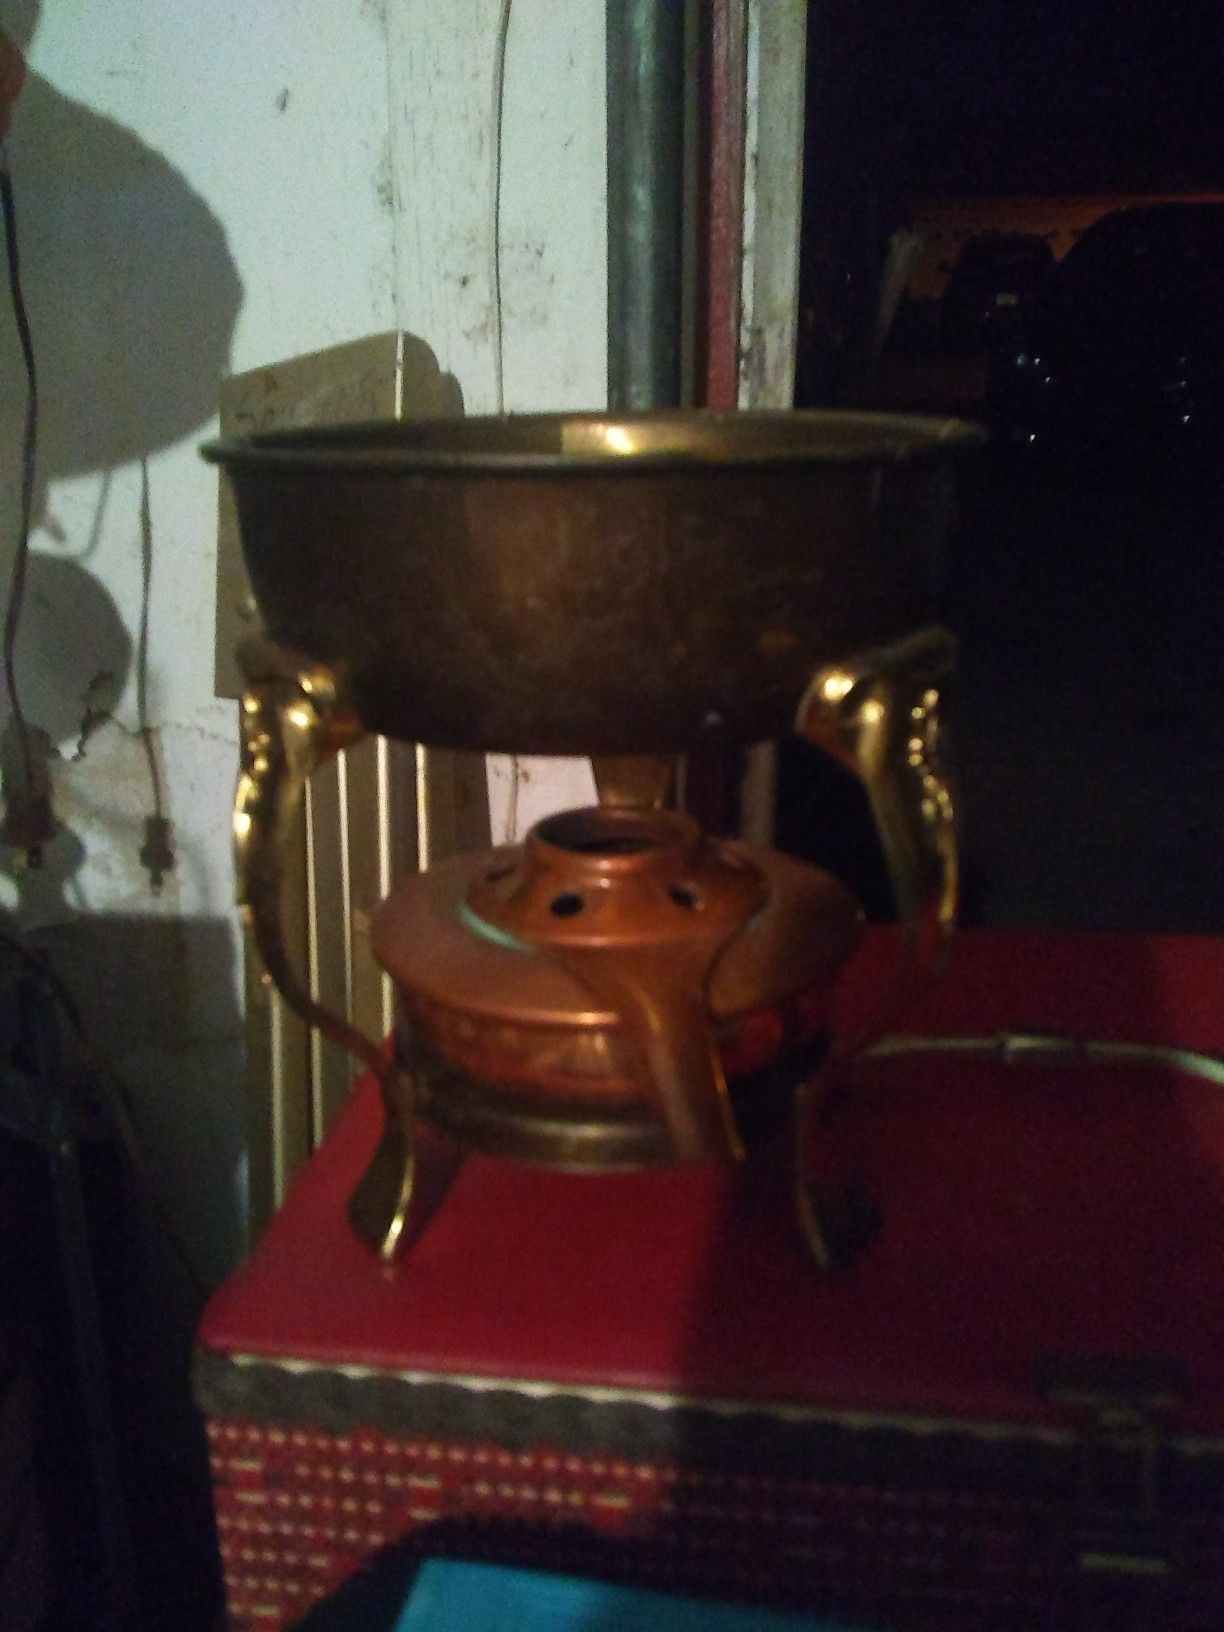 Swiss made Copper fondue burner and brass pot stand